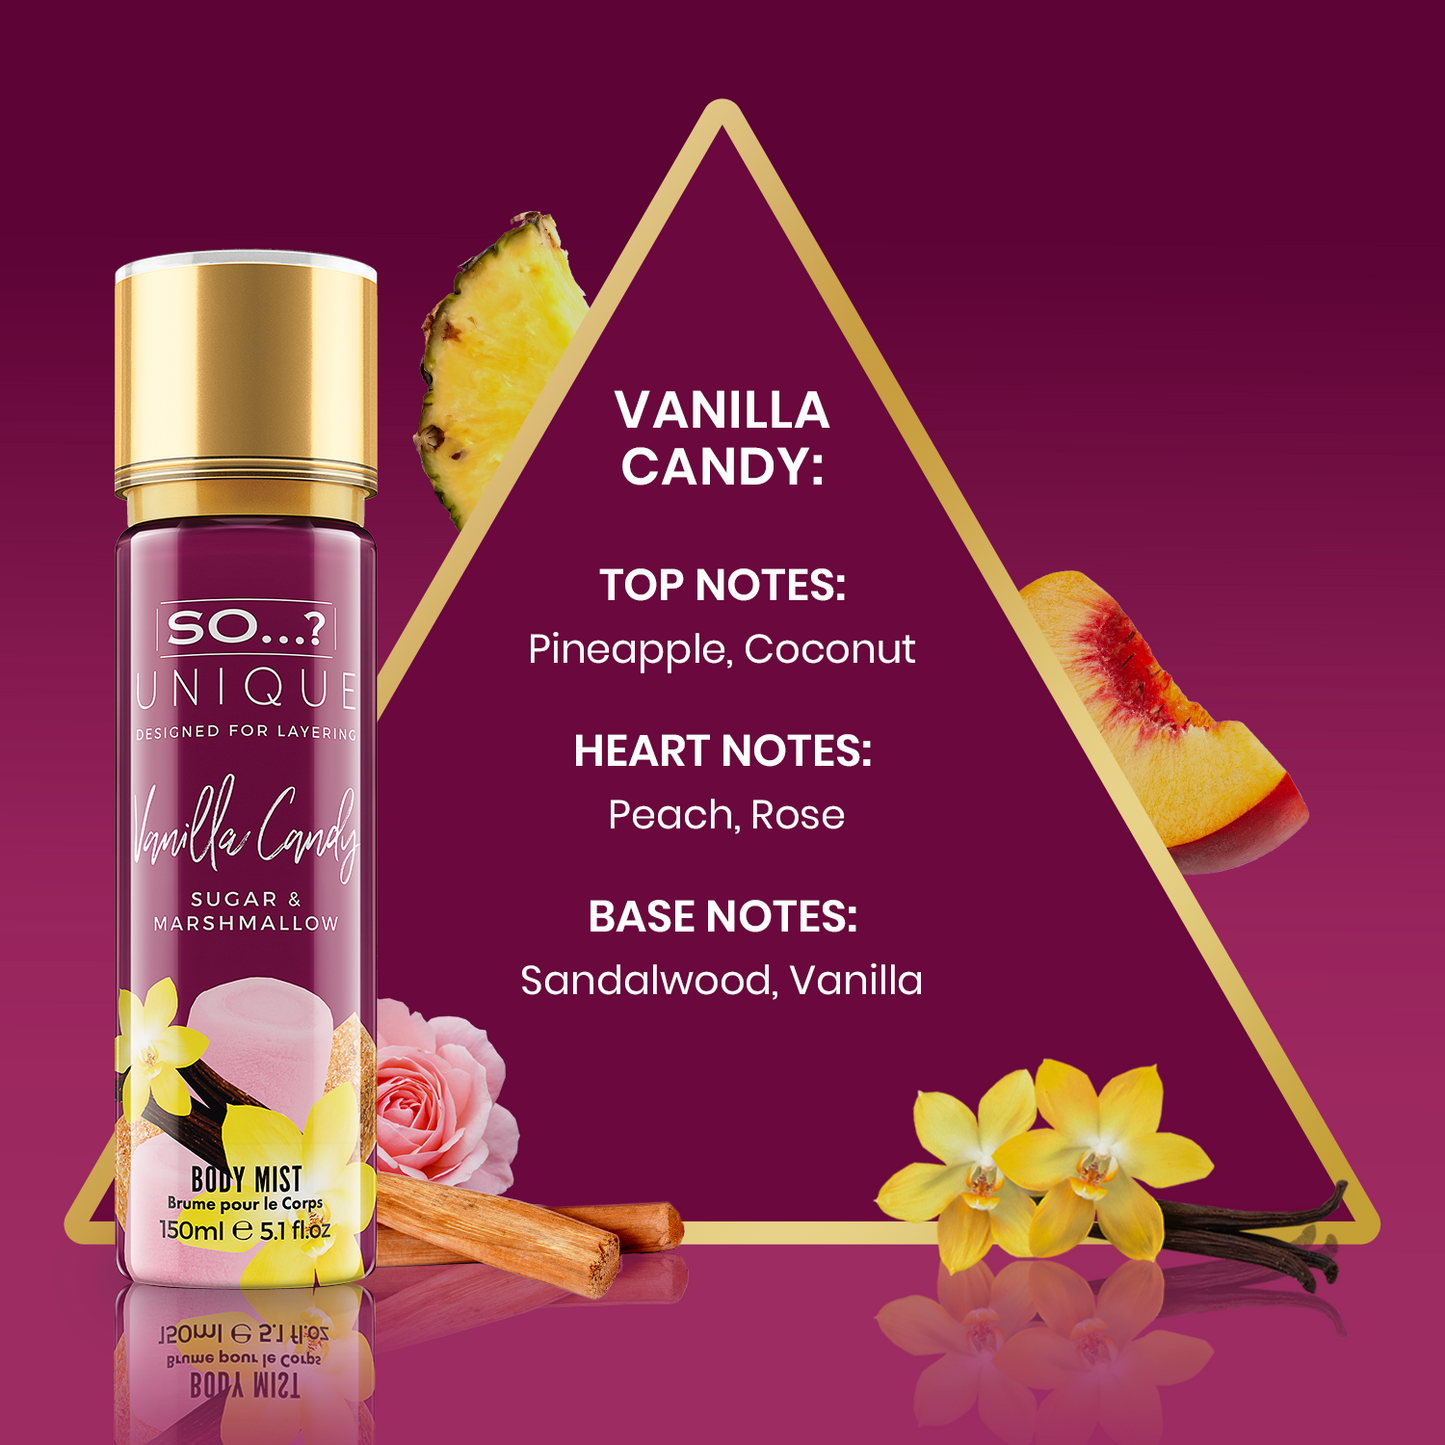 SO...? UNIQUE Vanilla Candy 150ml